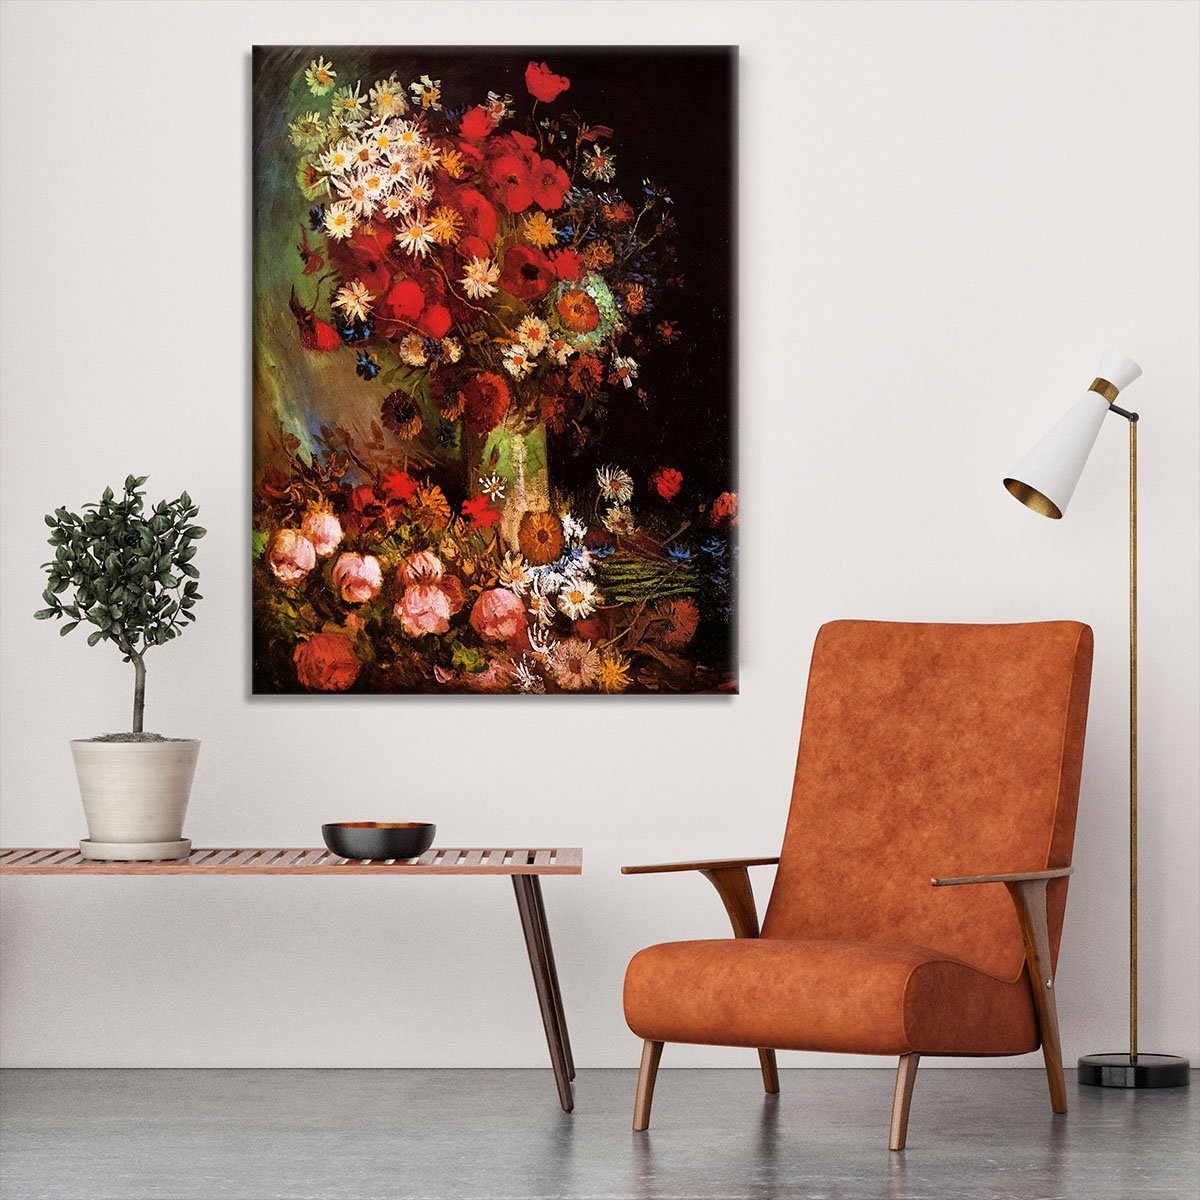 Vase with Poppies Cornflowers Peonies and Chrysanthemums by Van Gogh Canvas Print or Poster